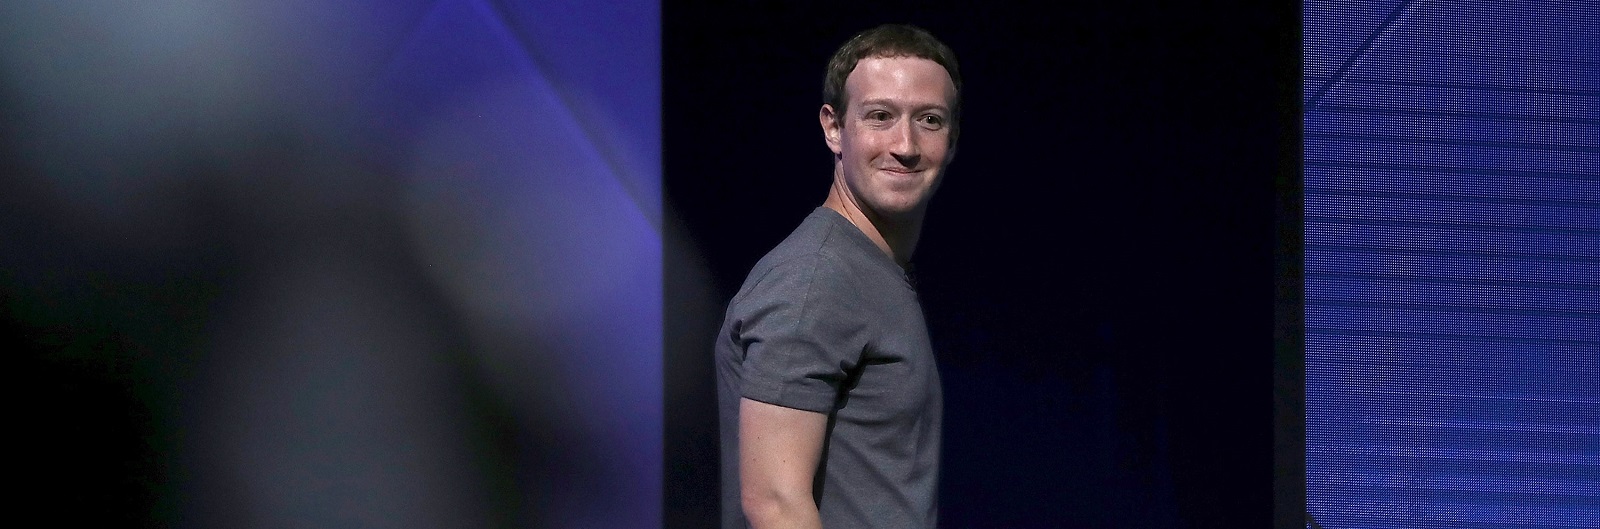 Facebook CEO Mark Zuckerberg at the company’s developer conference in San Jose last month (Photo: Justin Sullivan/Getty Images)